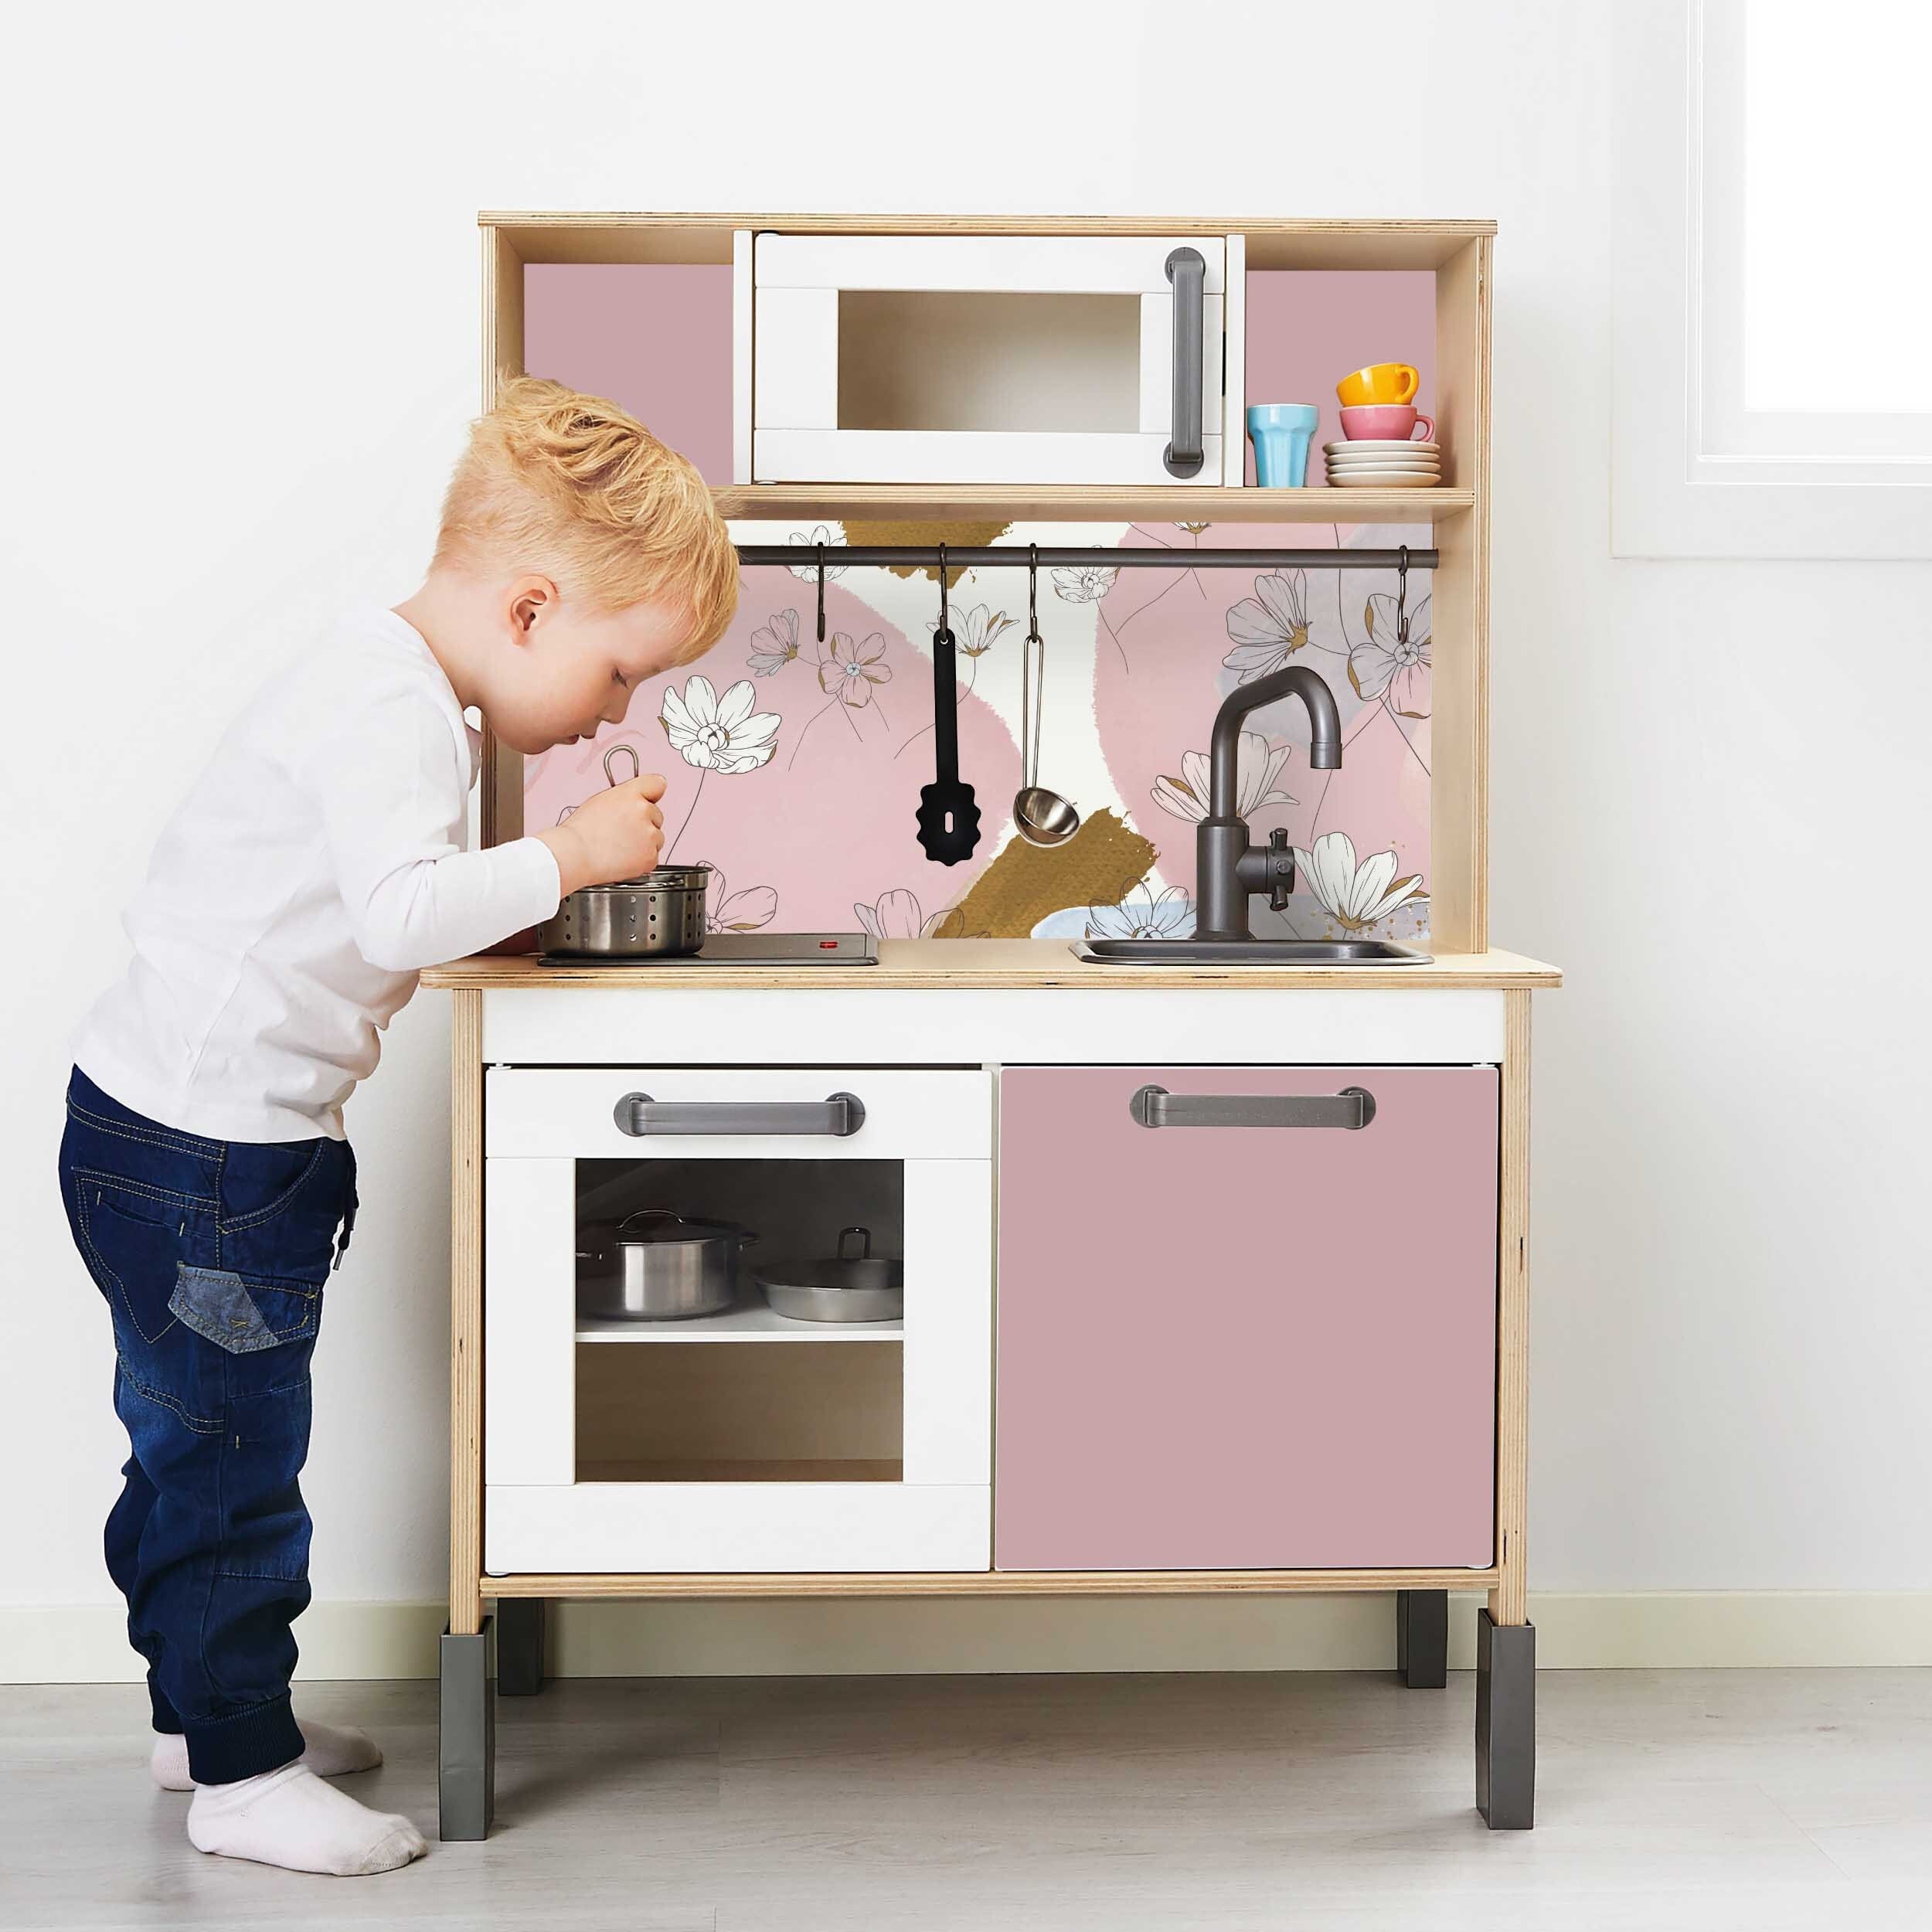 Vinilo infantil para cocina Ikea Duktig modelo Apple. - Laluilolo Kids Decor